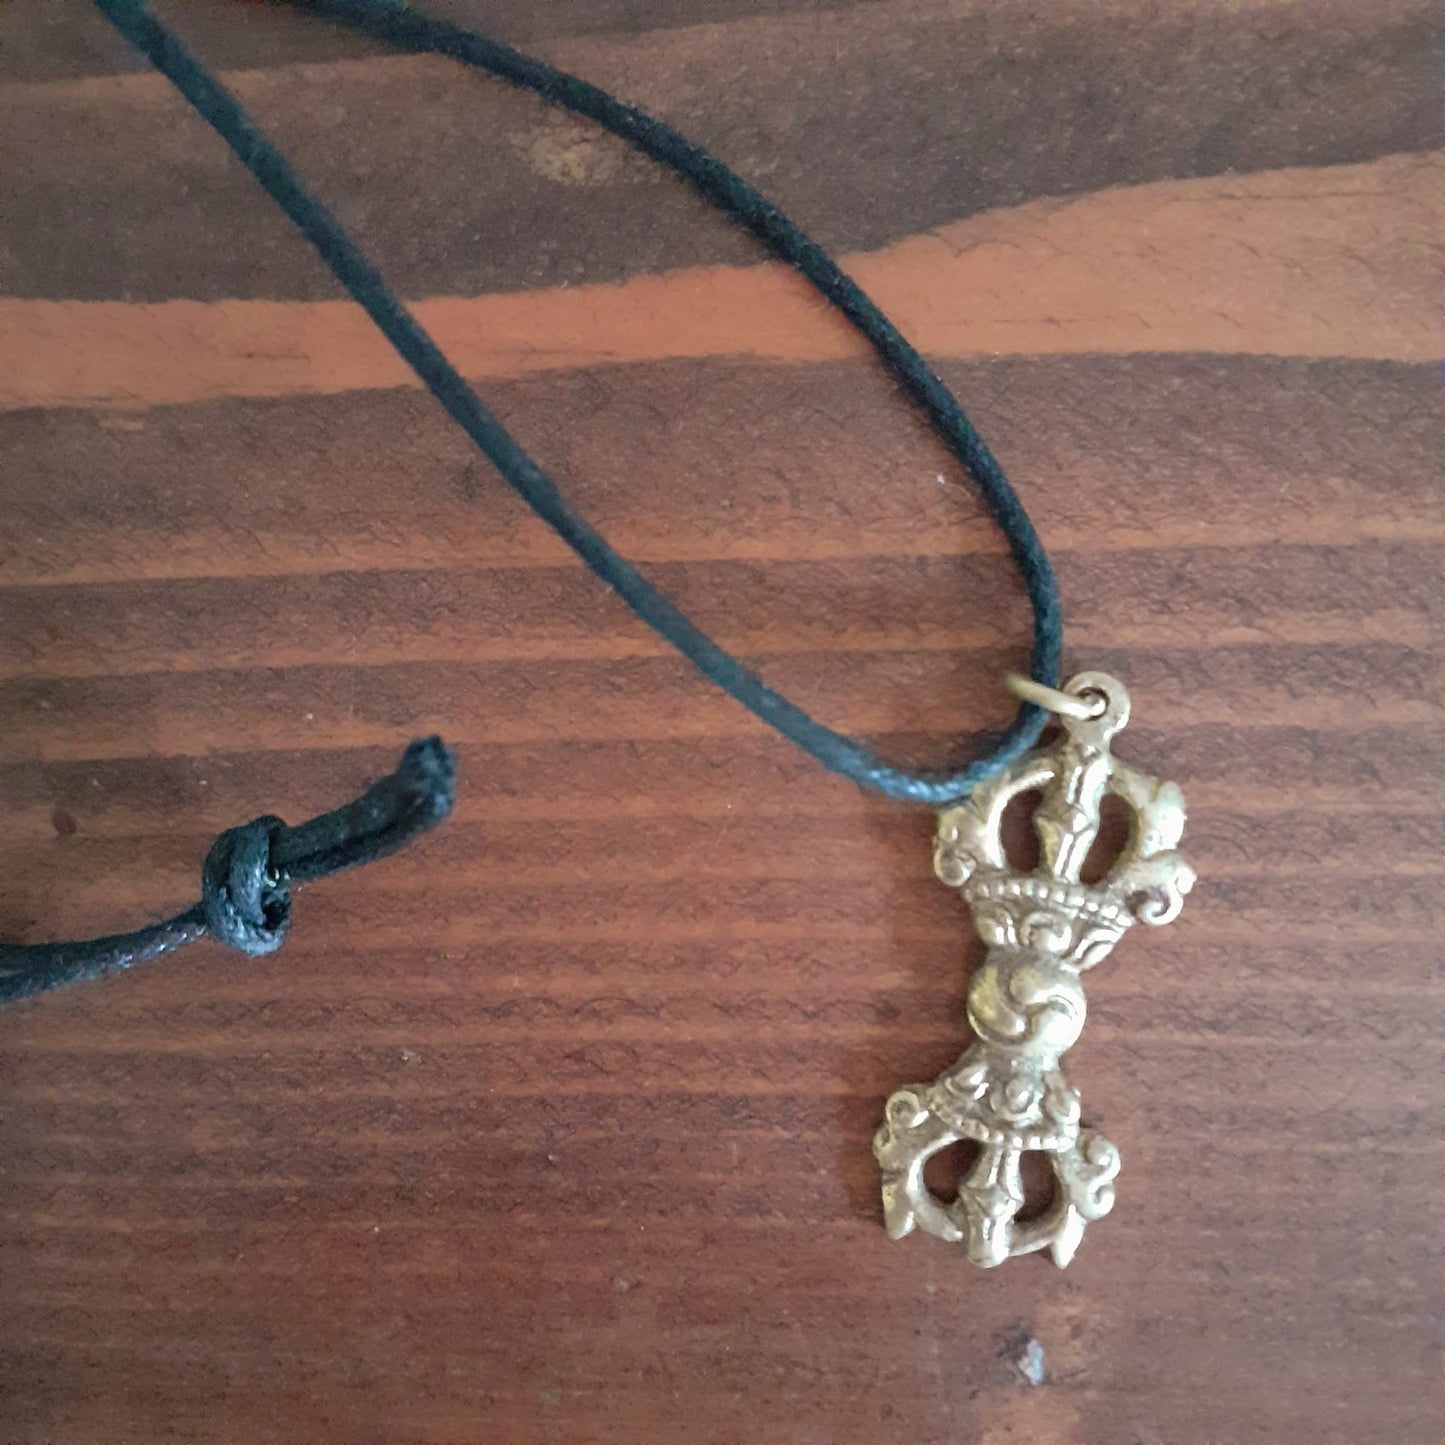 Dorje (Vajra) Tibetan Buddhist Pendent Necklace